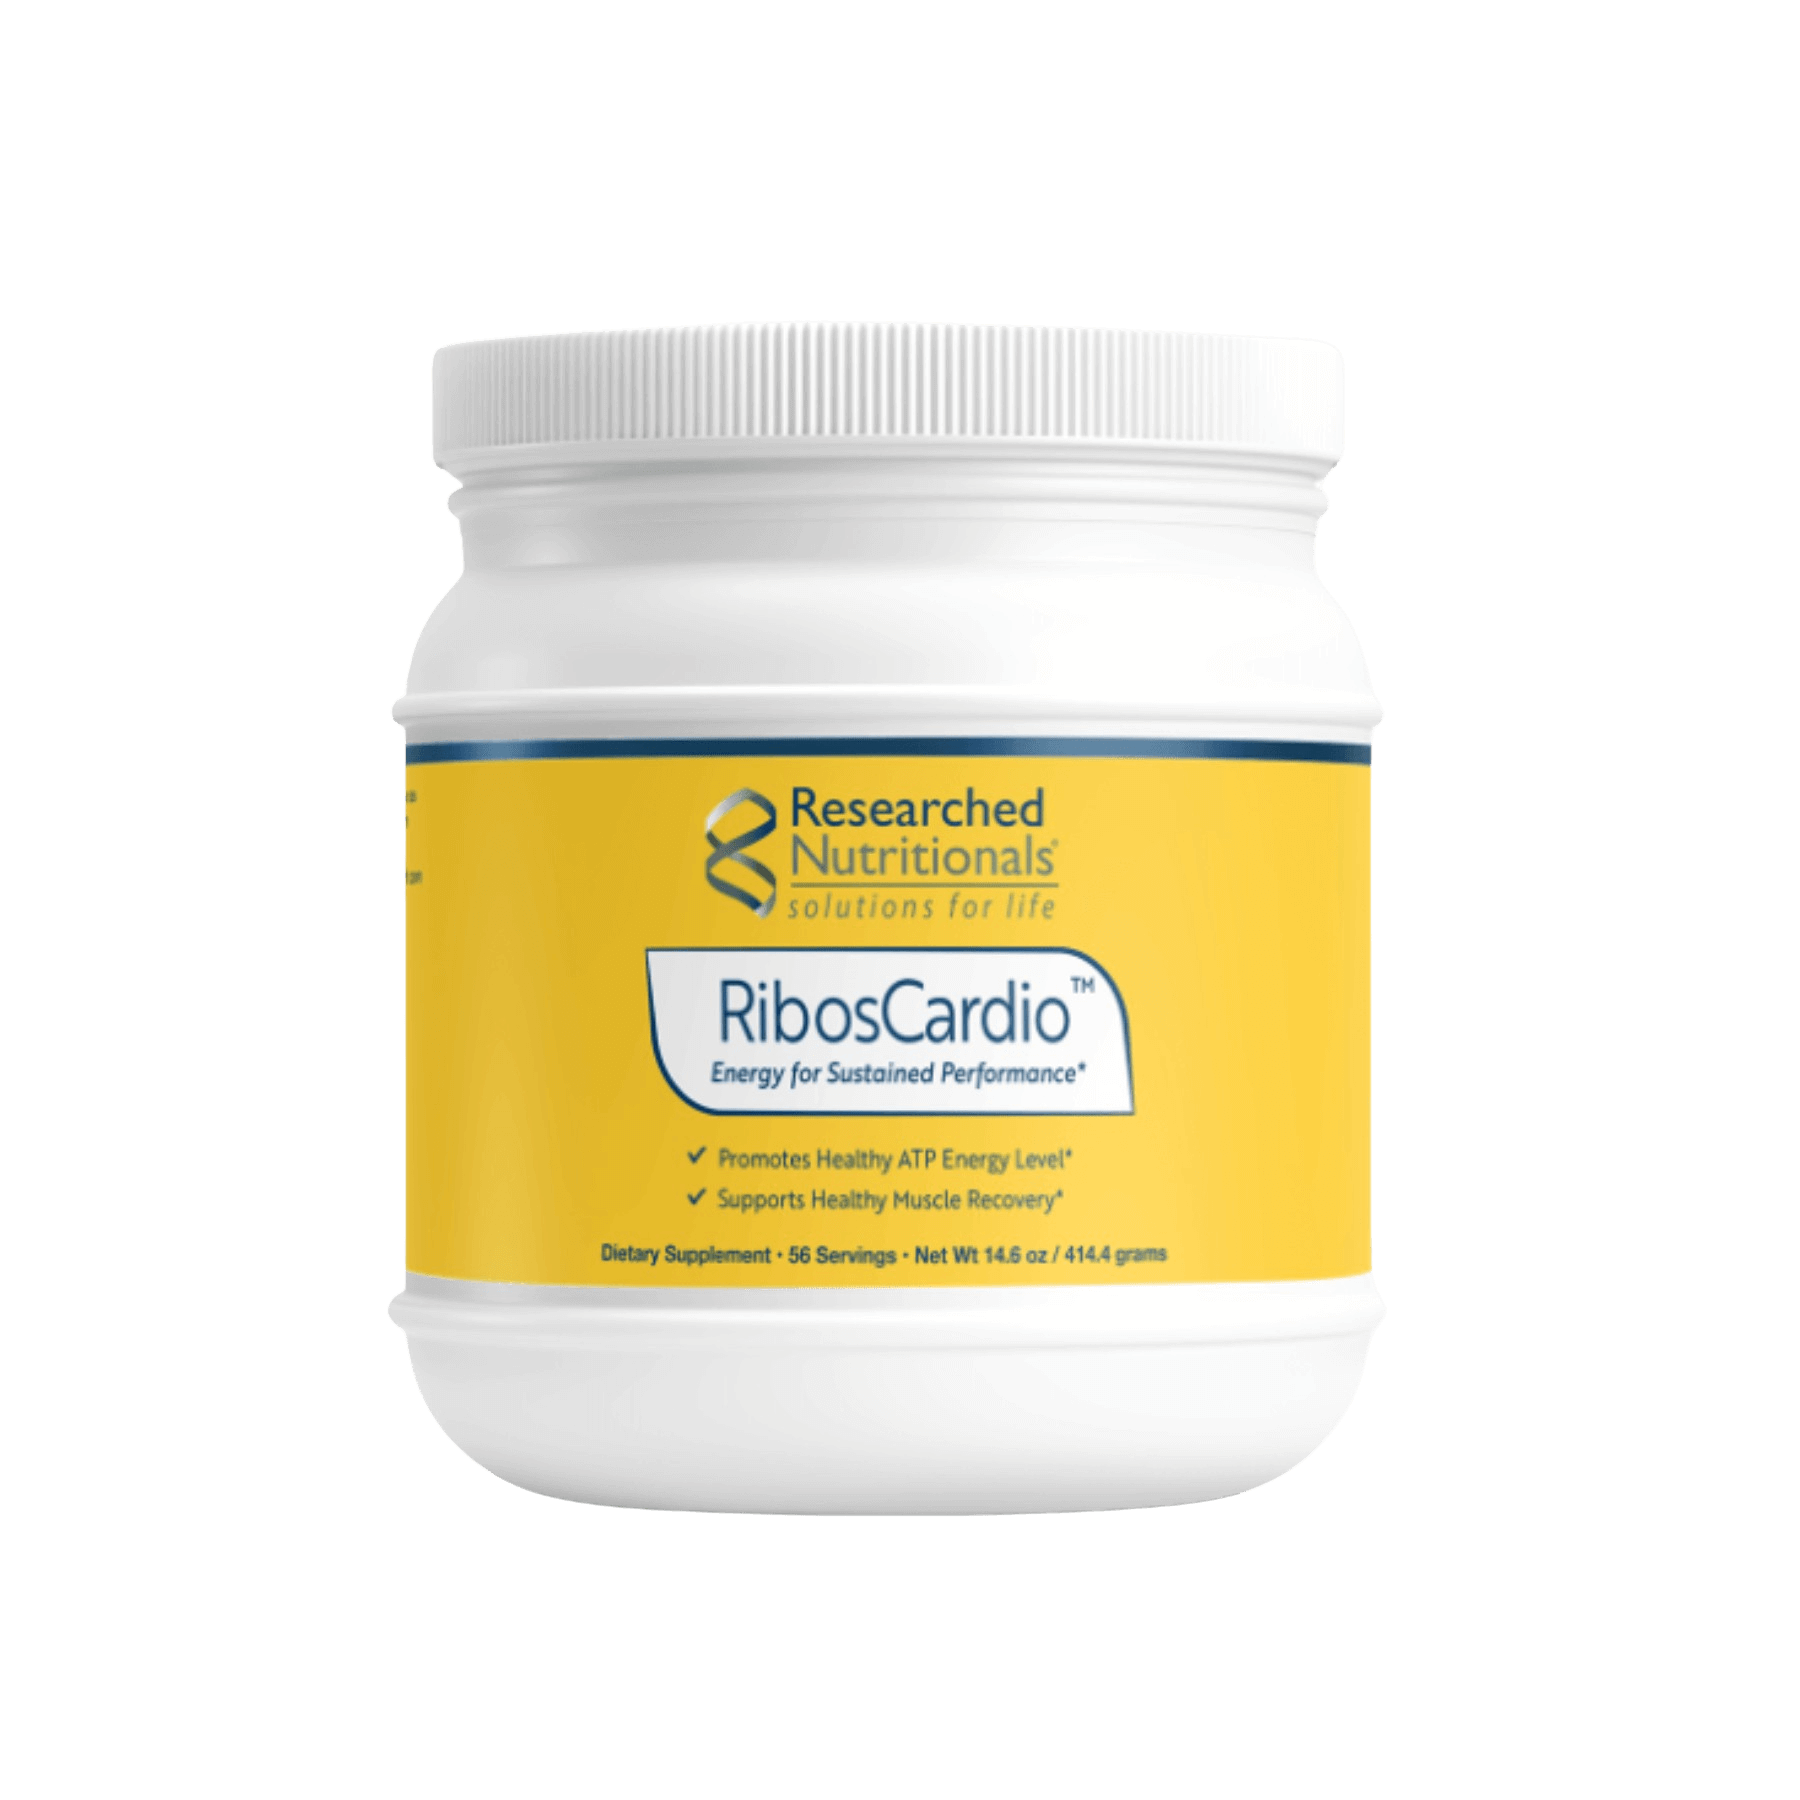 Researched Nutritionals RibosCardio Powder